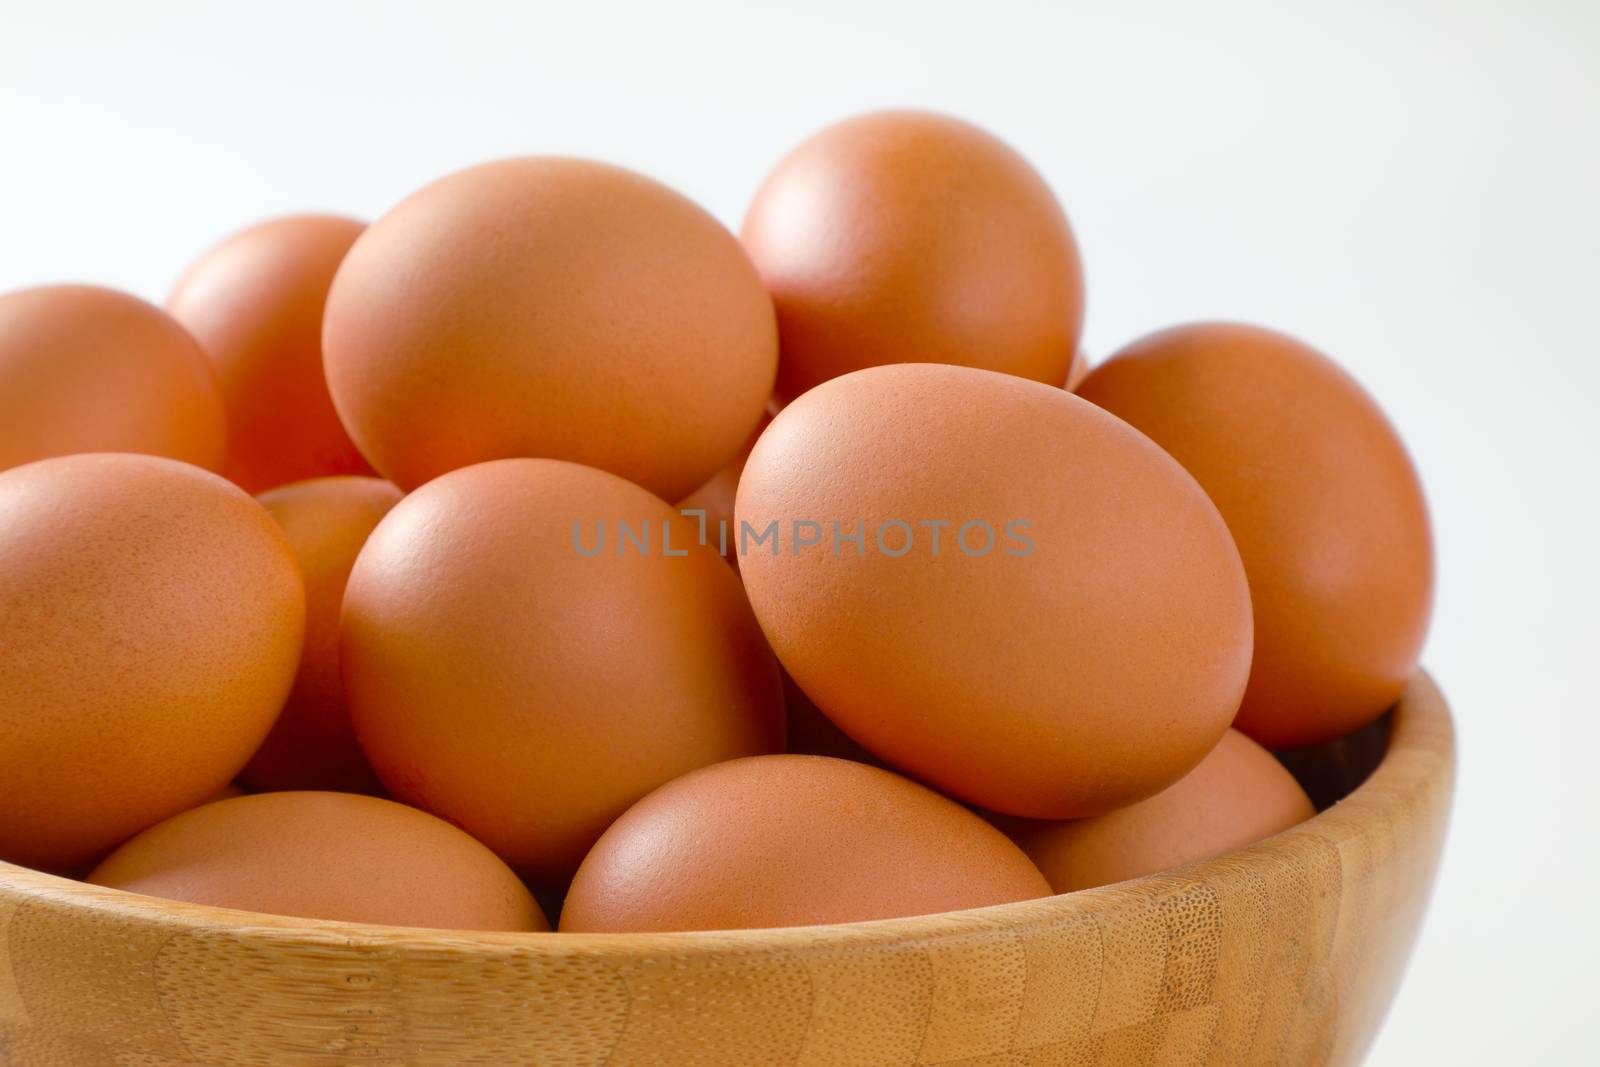 Fresh brown eggs in wooden bowl